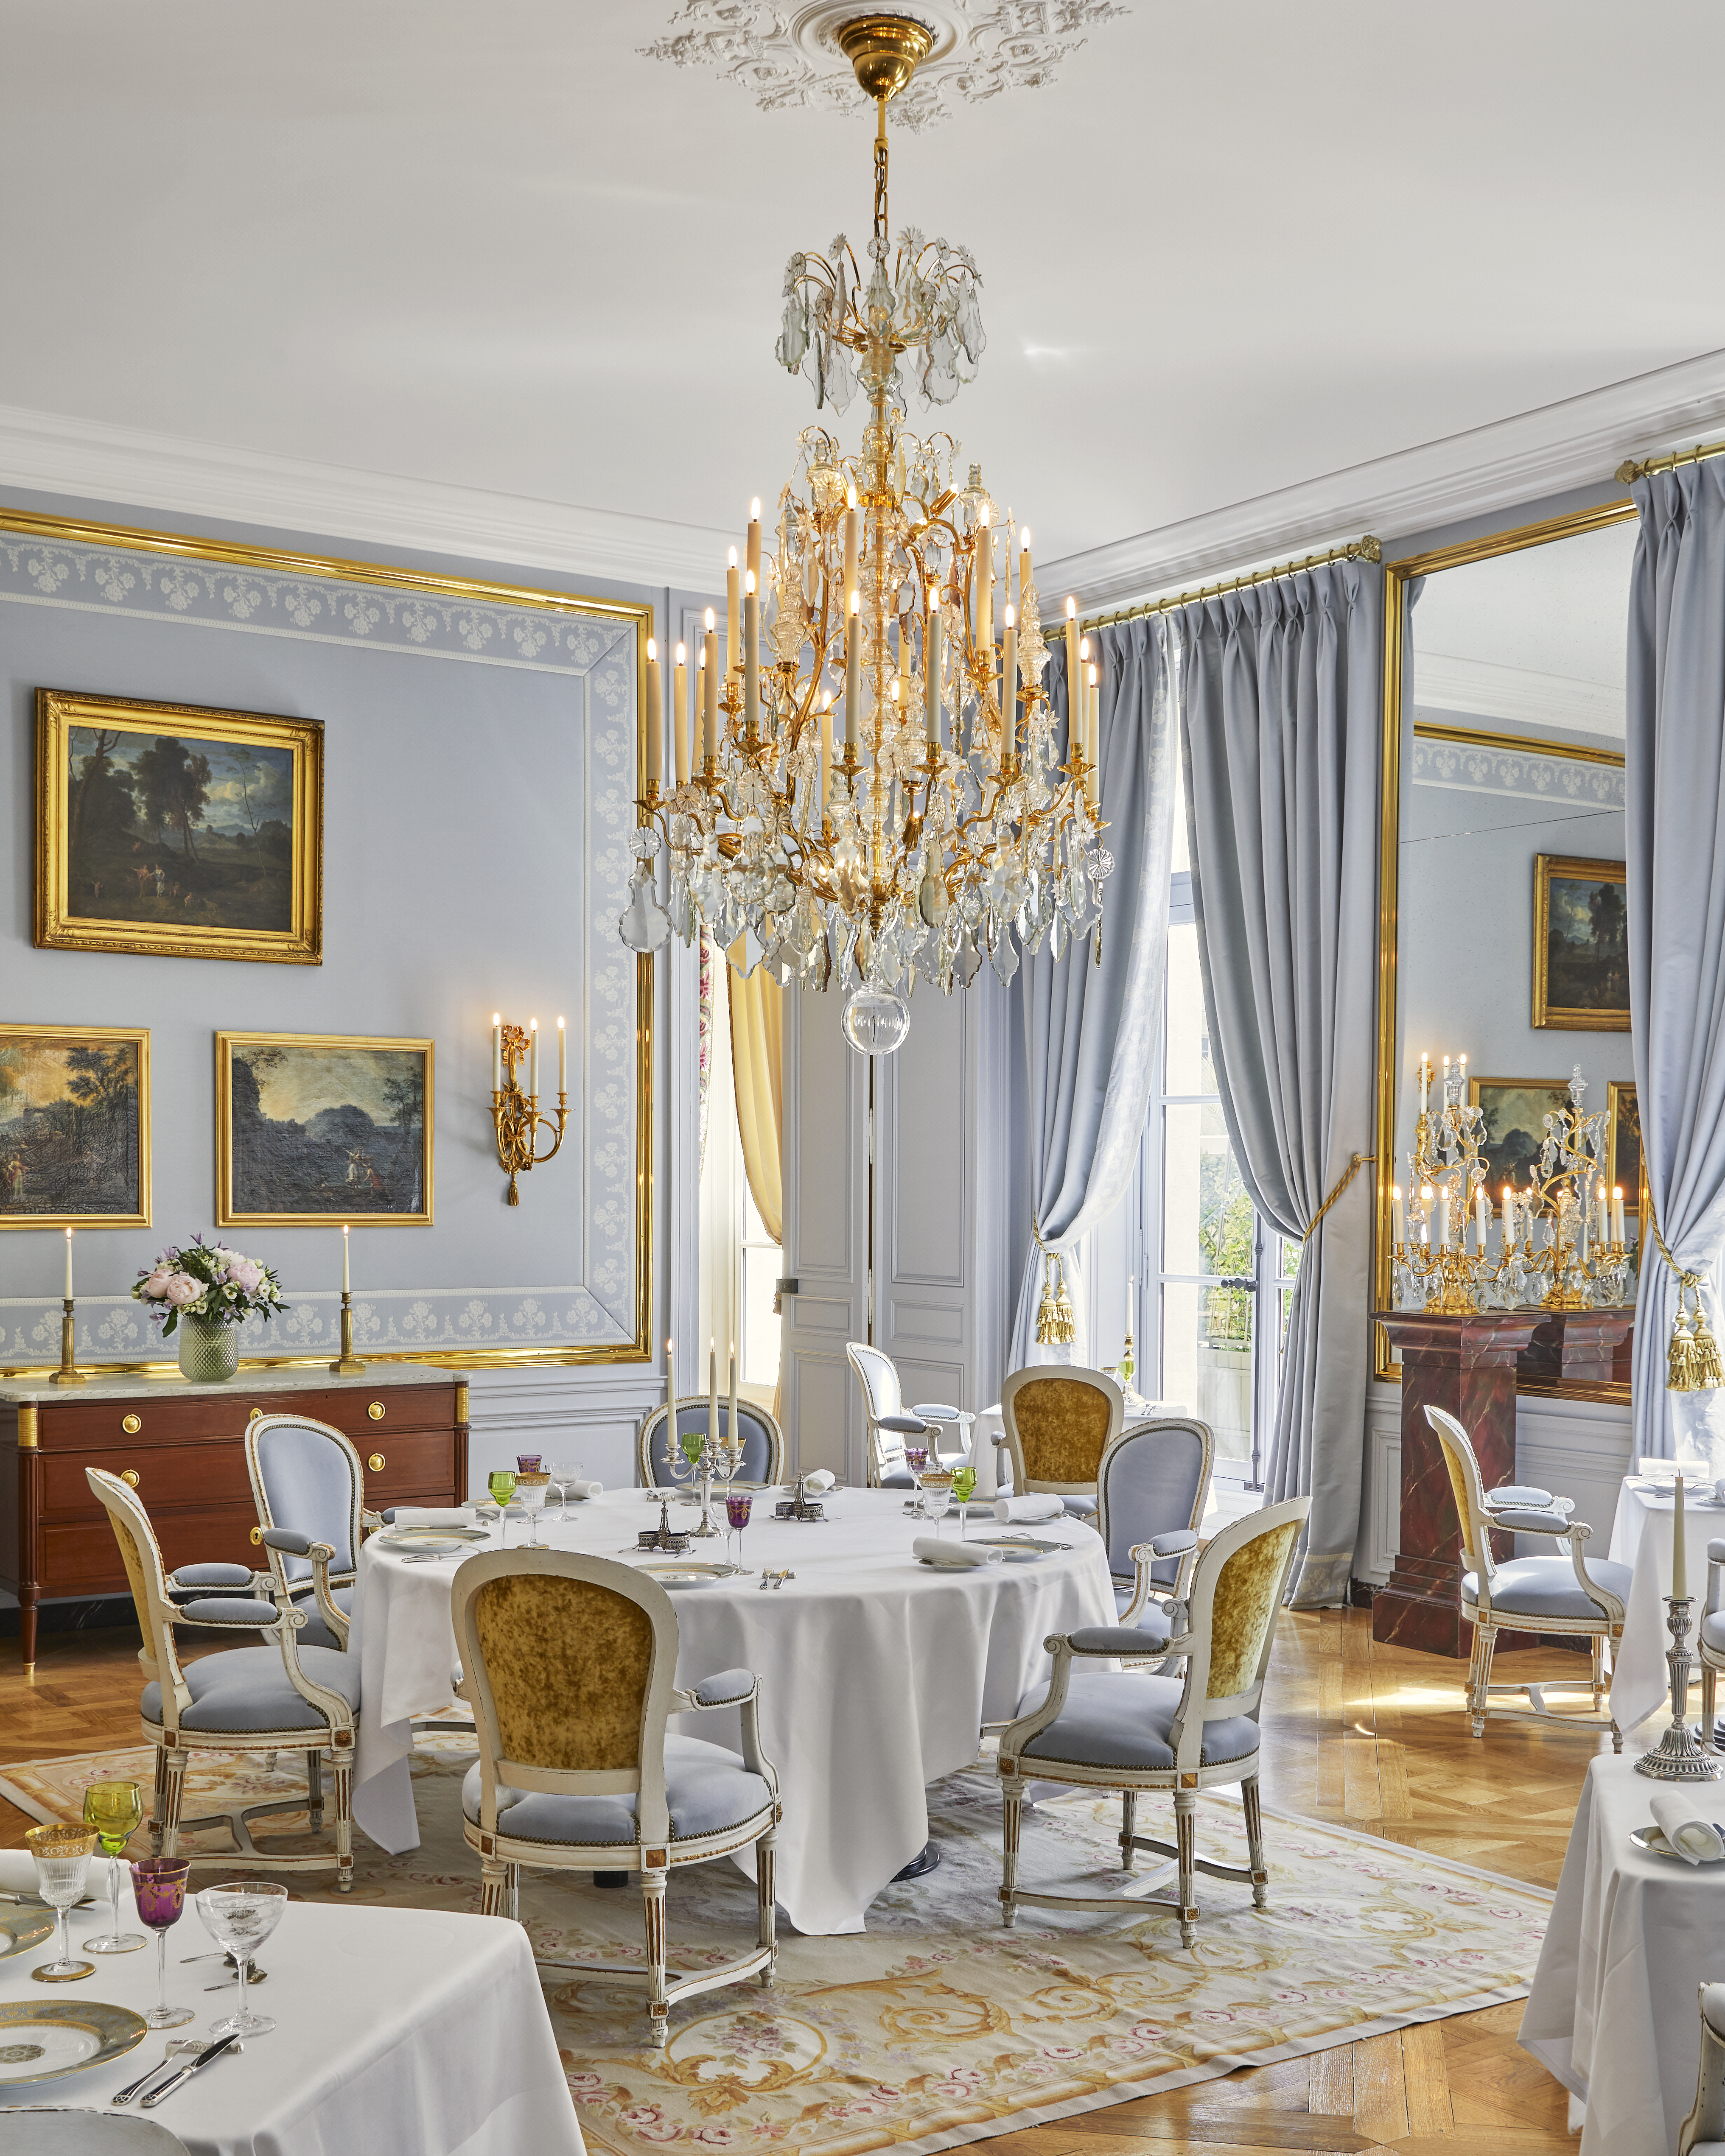 Le Grand Cabinet, interiors worthy ov Versailles